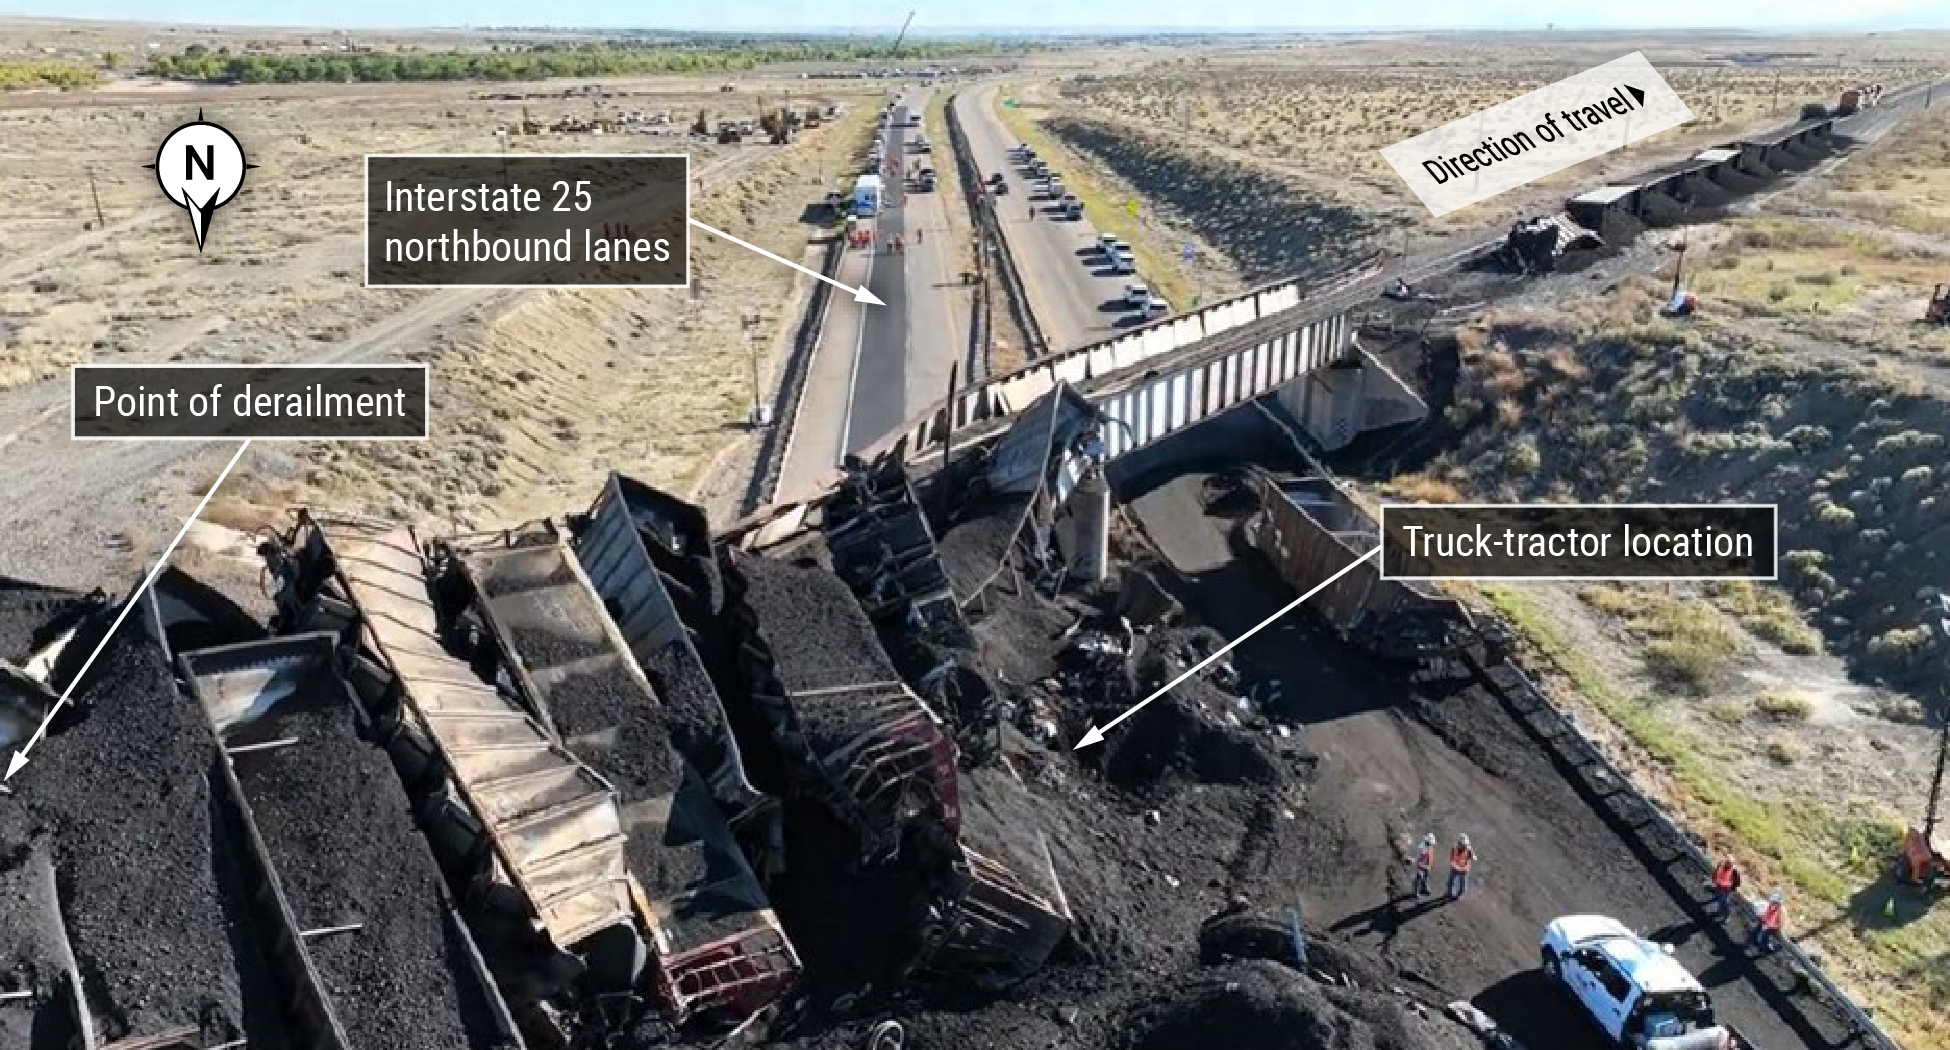 The derailment site. (Courtesy of BNSF.)